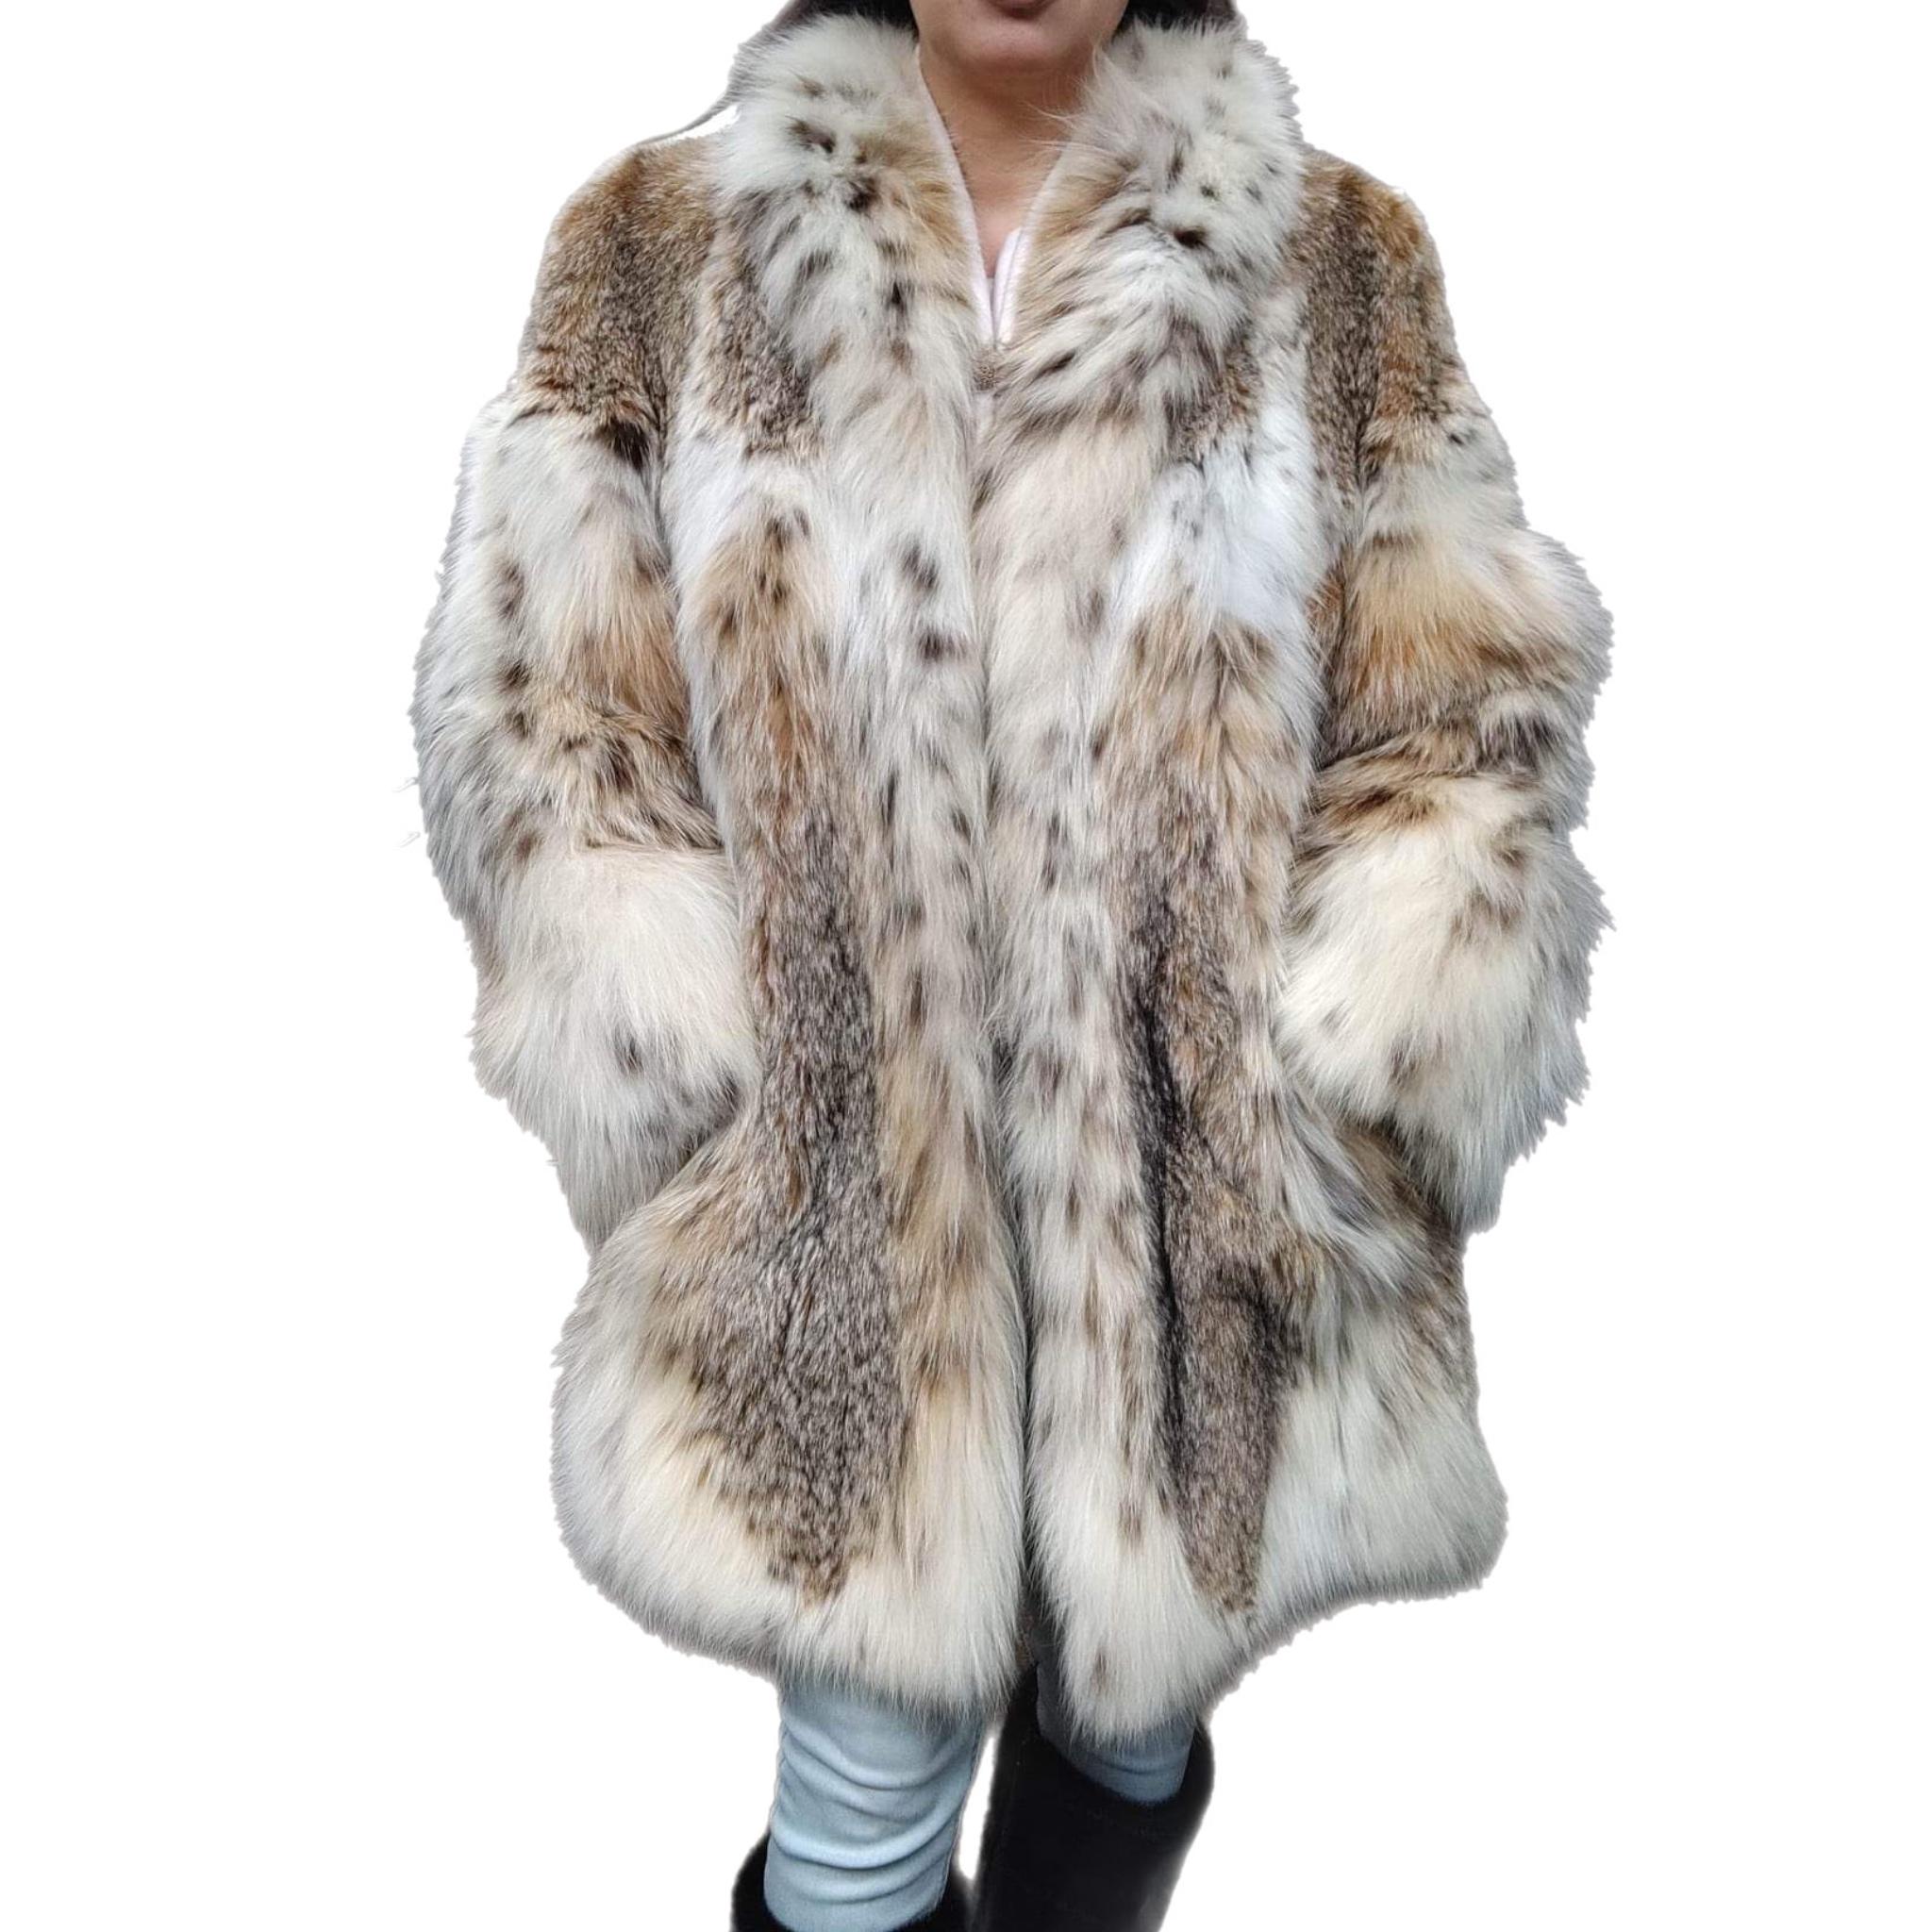 Brand new lightweight lynx fur coat size 12-14 1